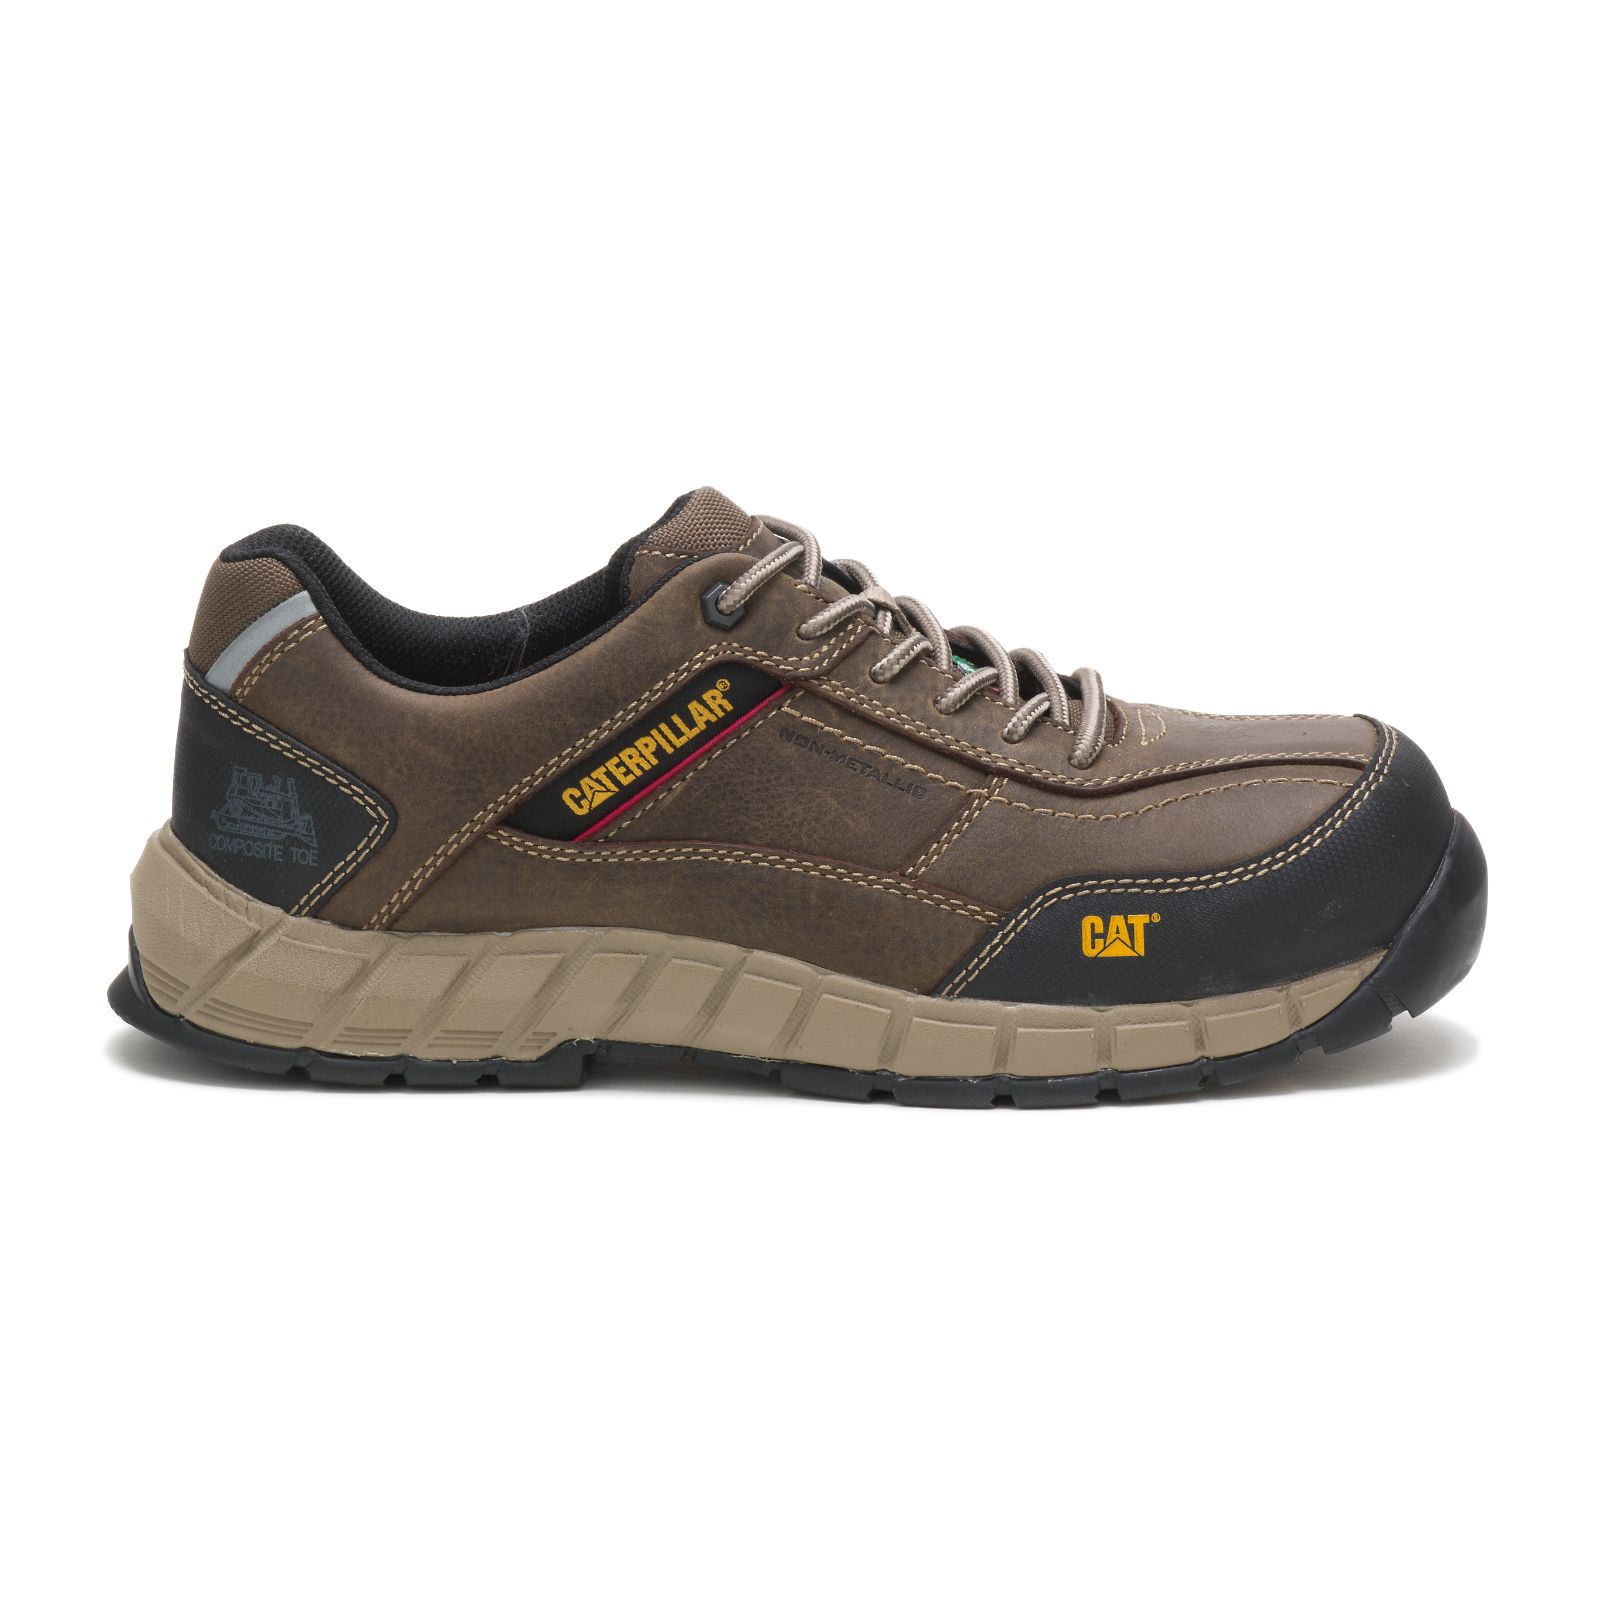 Caterpillar Streamline Leather Csa Composite Toe Philippines - Mens Work Shoes - Dark Grey 65831JIKZ